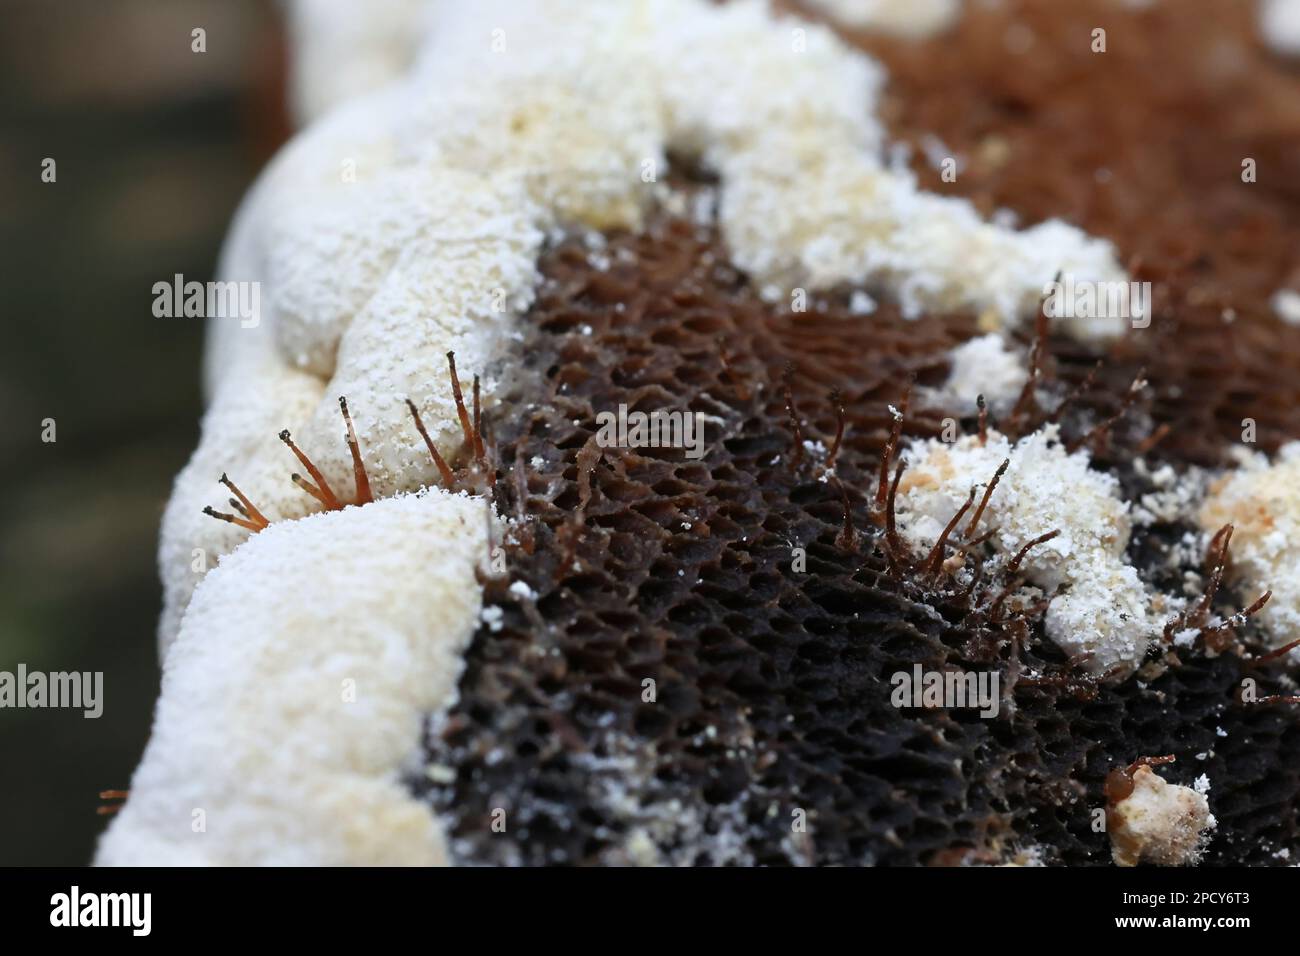 Melanospora lagenaria and Trichoderma pulvinatum growing parasitic on a polypore fungus in Finland Stock Photo